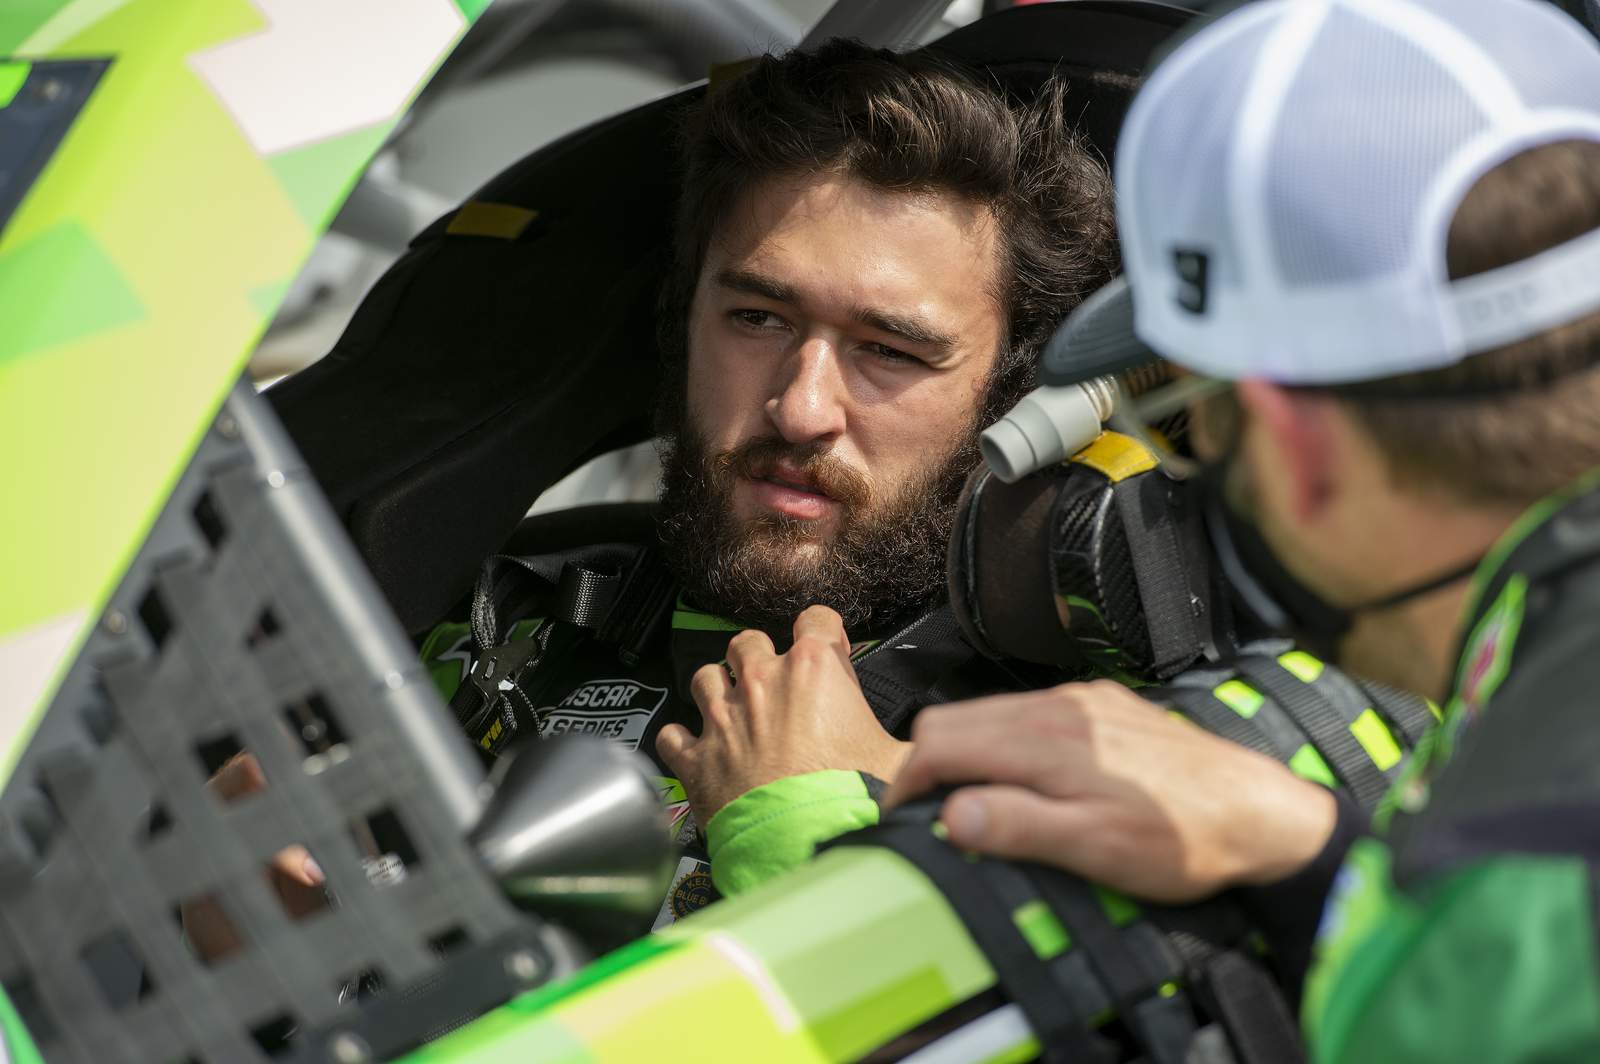 Elliott fails inspection before NASCAR's championship race